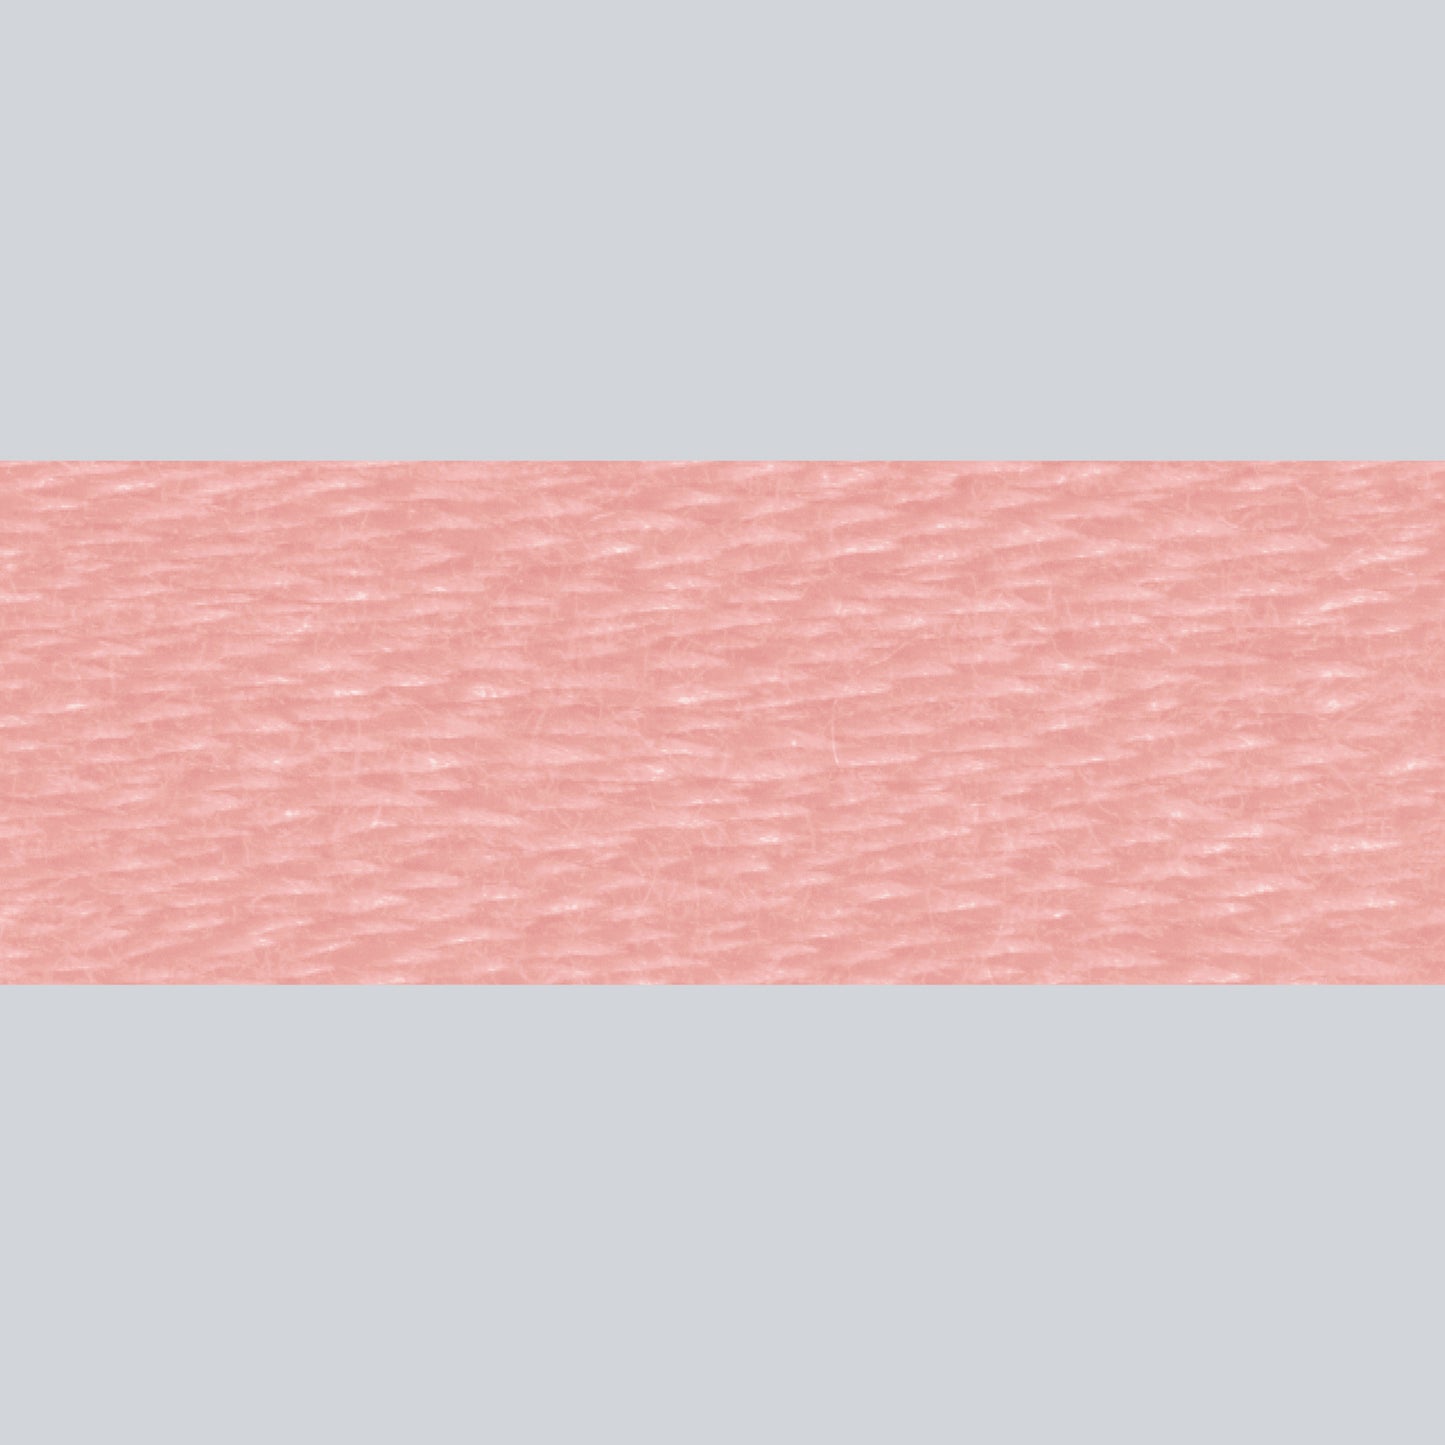 DMC Embroidery Floss - 152 Medium Light Shell Pink Alternative View #1